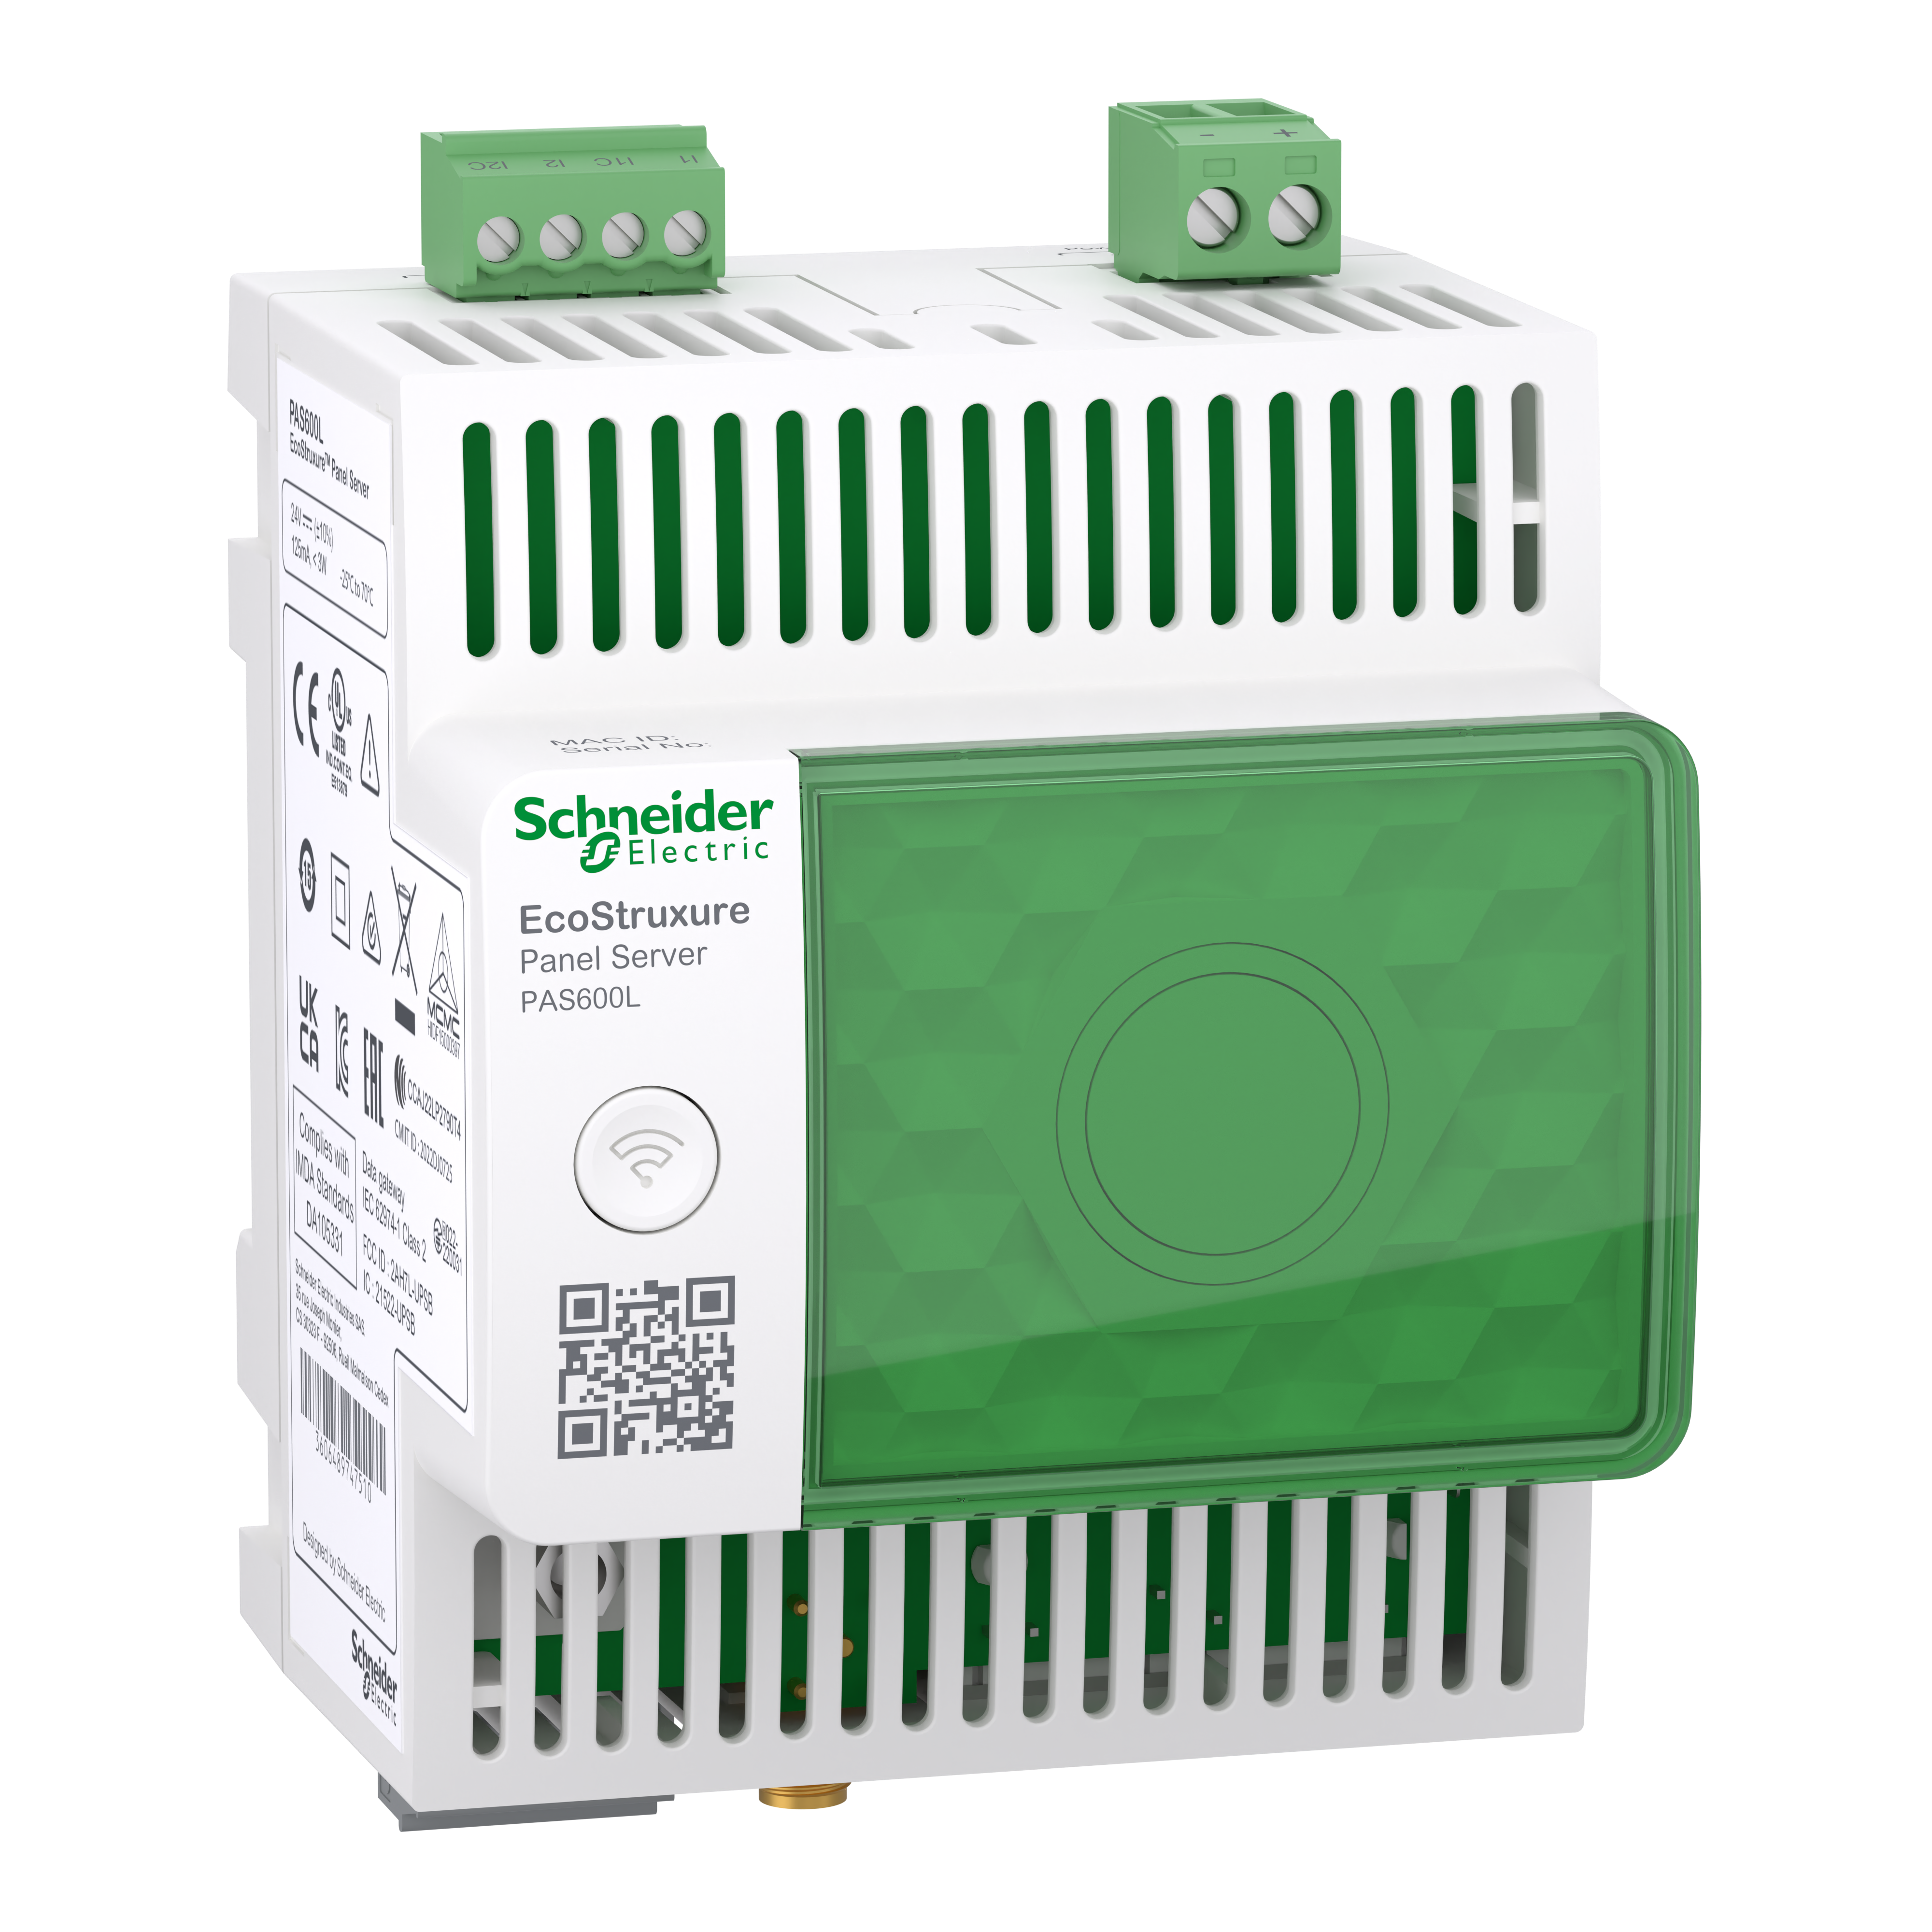 EcoStruxure: Panel Server Ethernet Gateway, univerzalni bežični koncentrator sa funkcijama Web stranice, 24 VDC